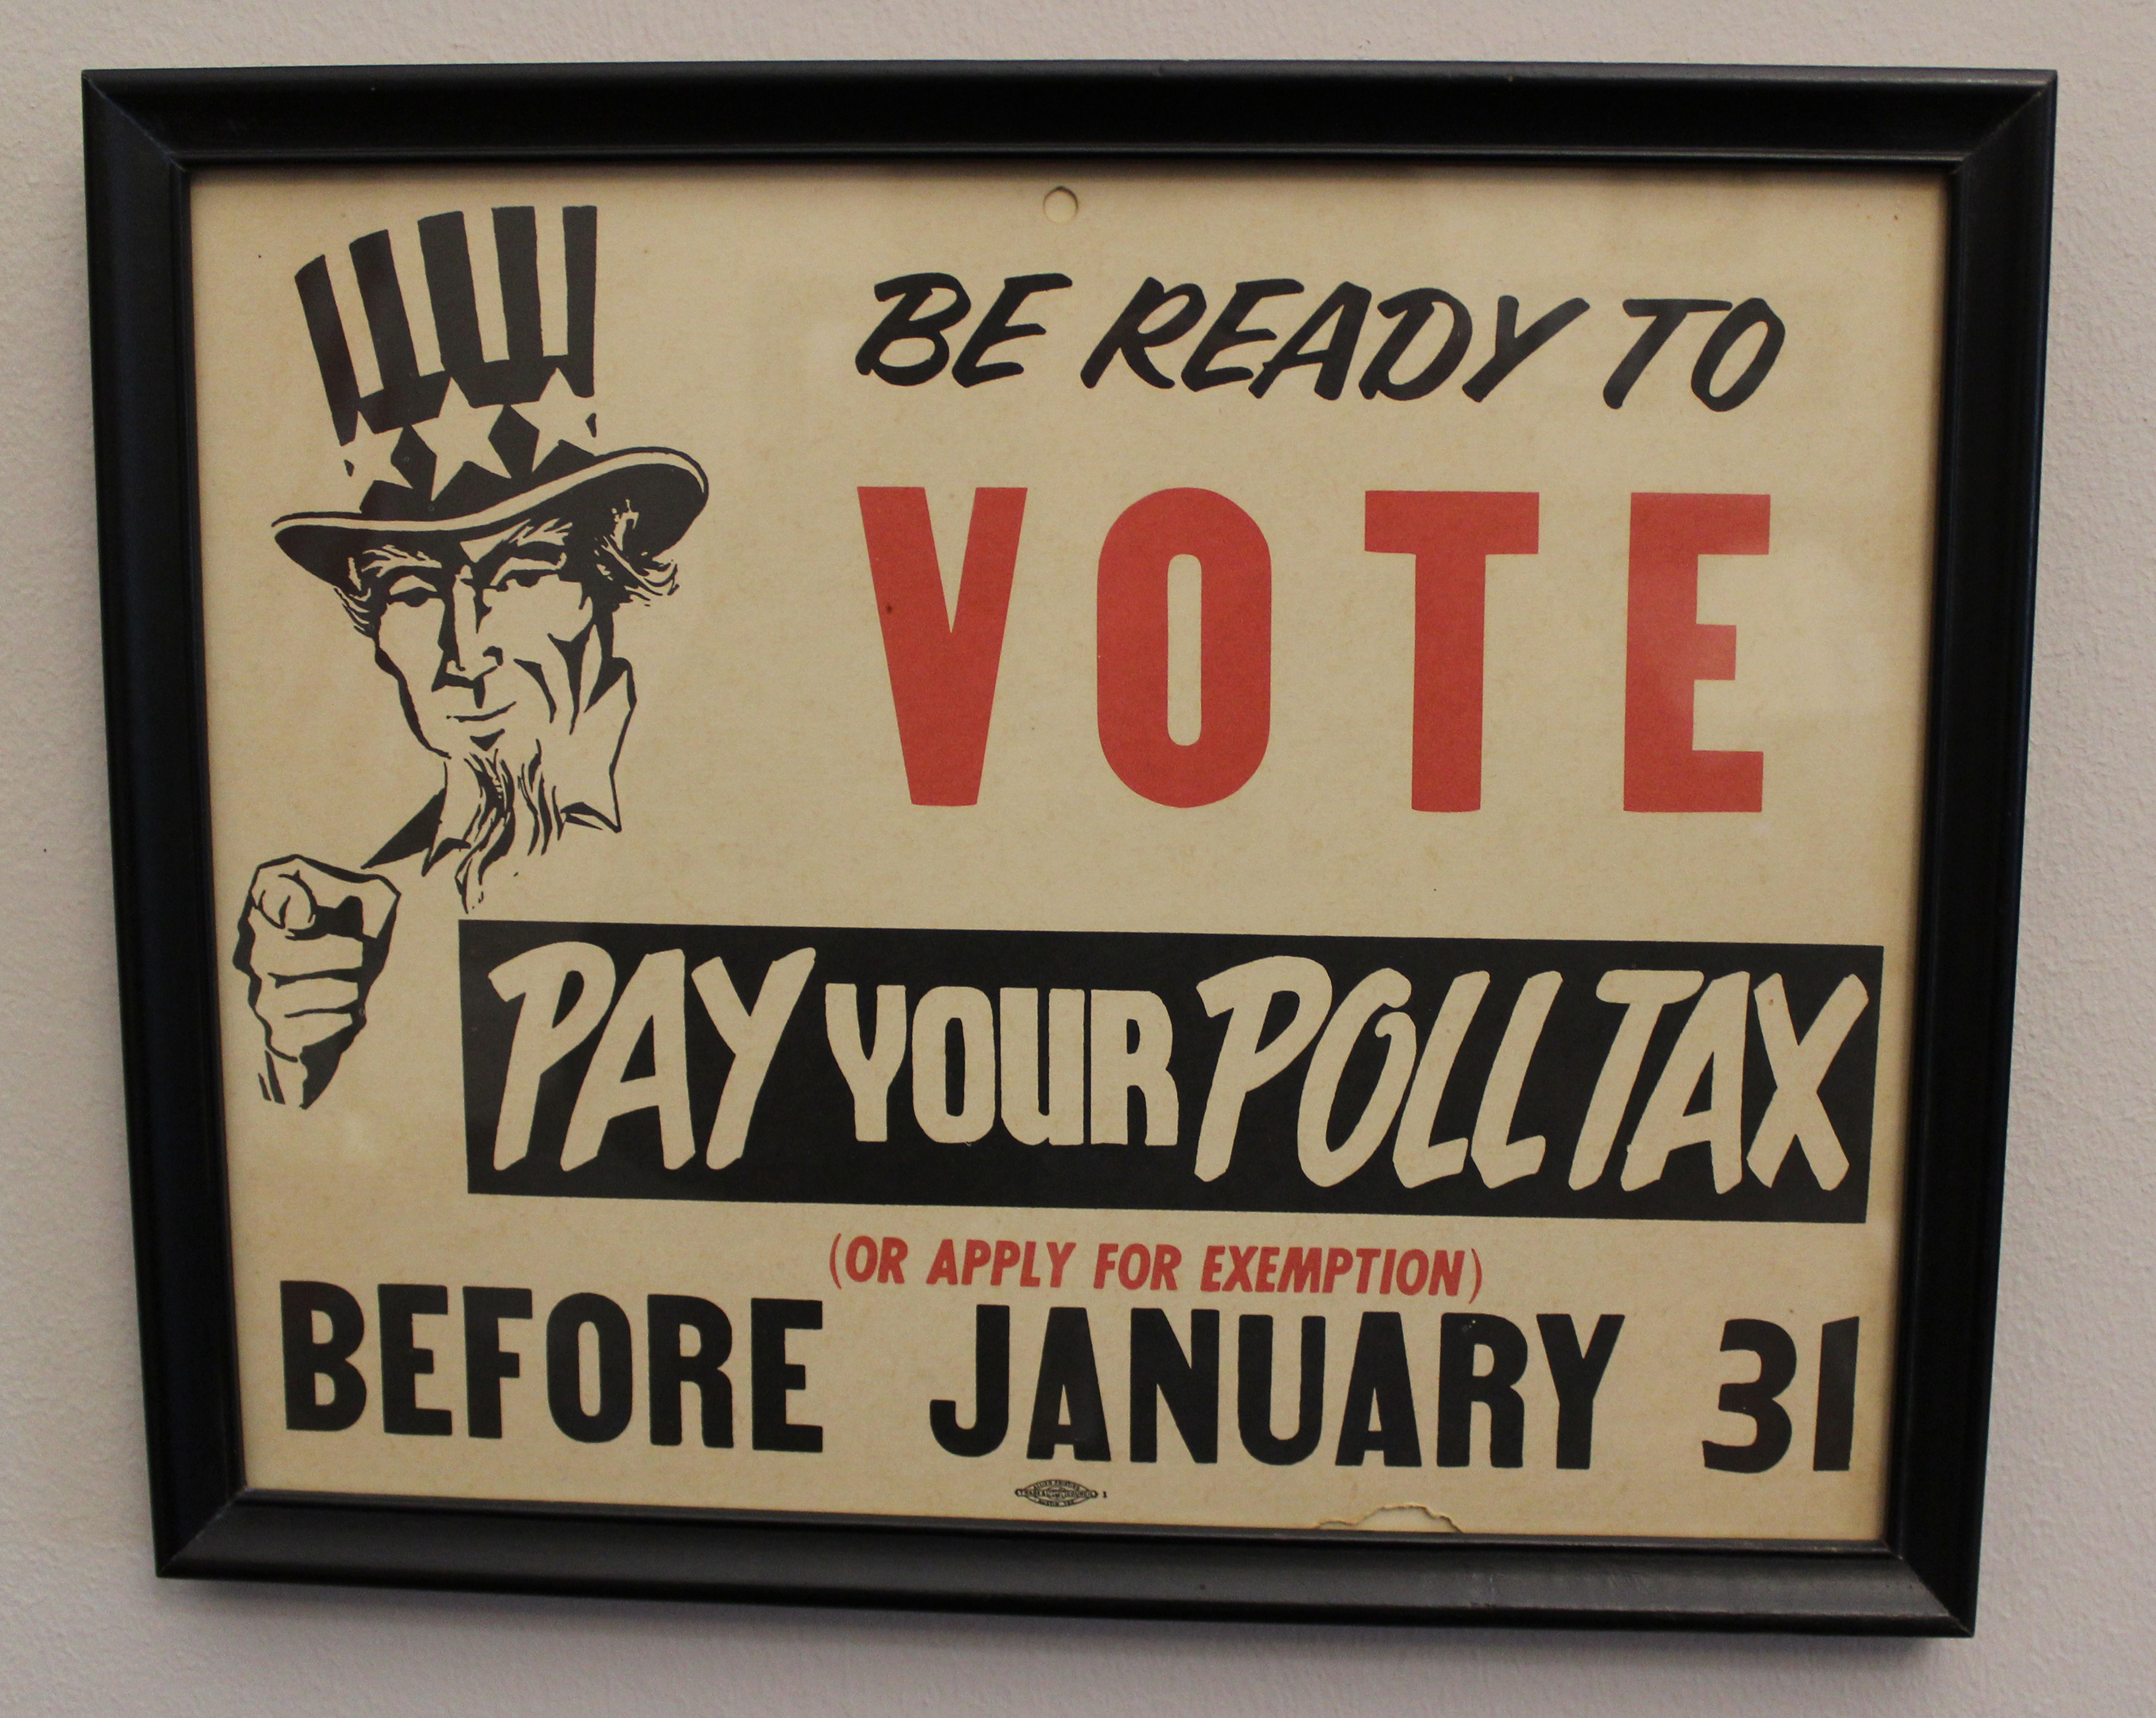 Votes 7. Poll Tax is. Pay no poll Tax. Poll Tax.